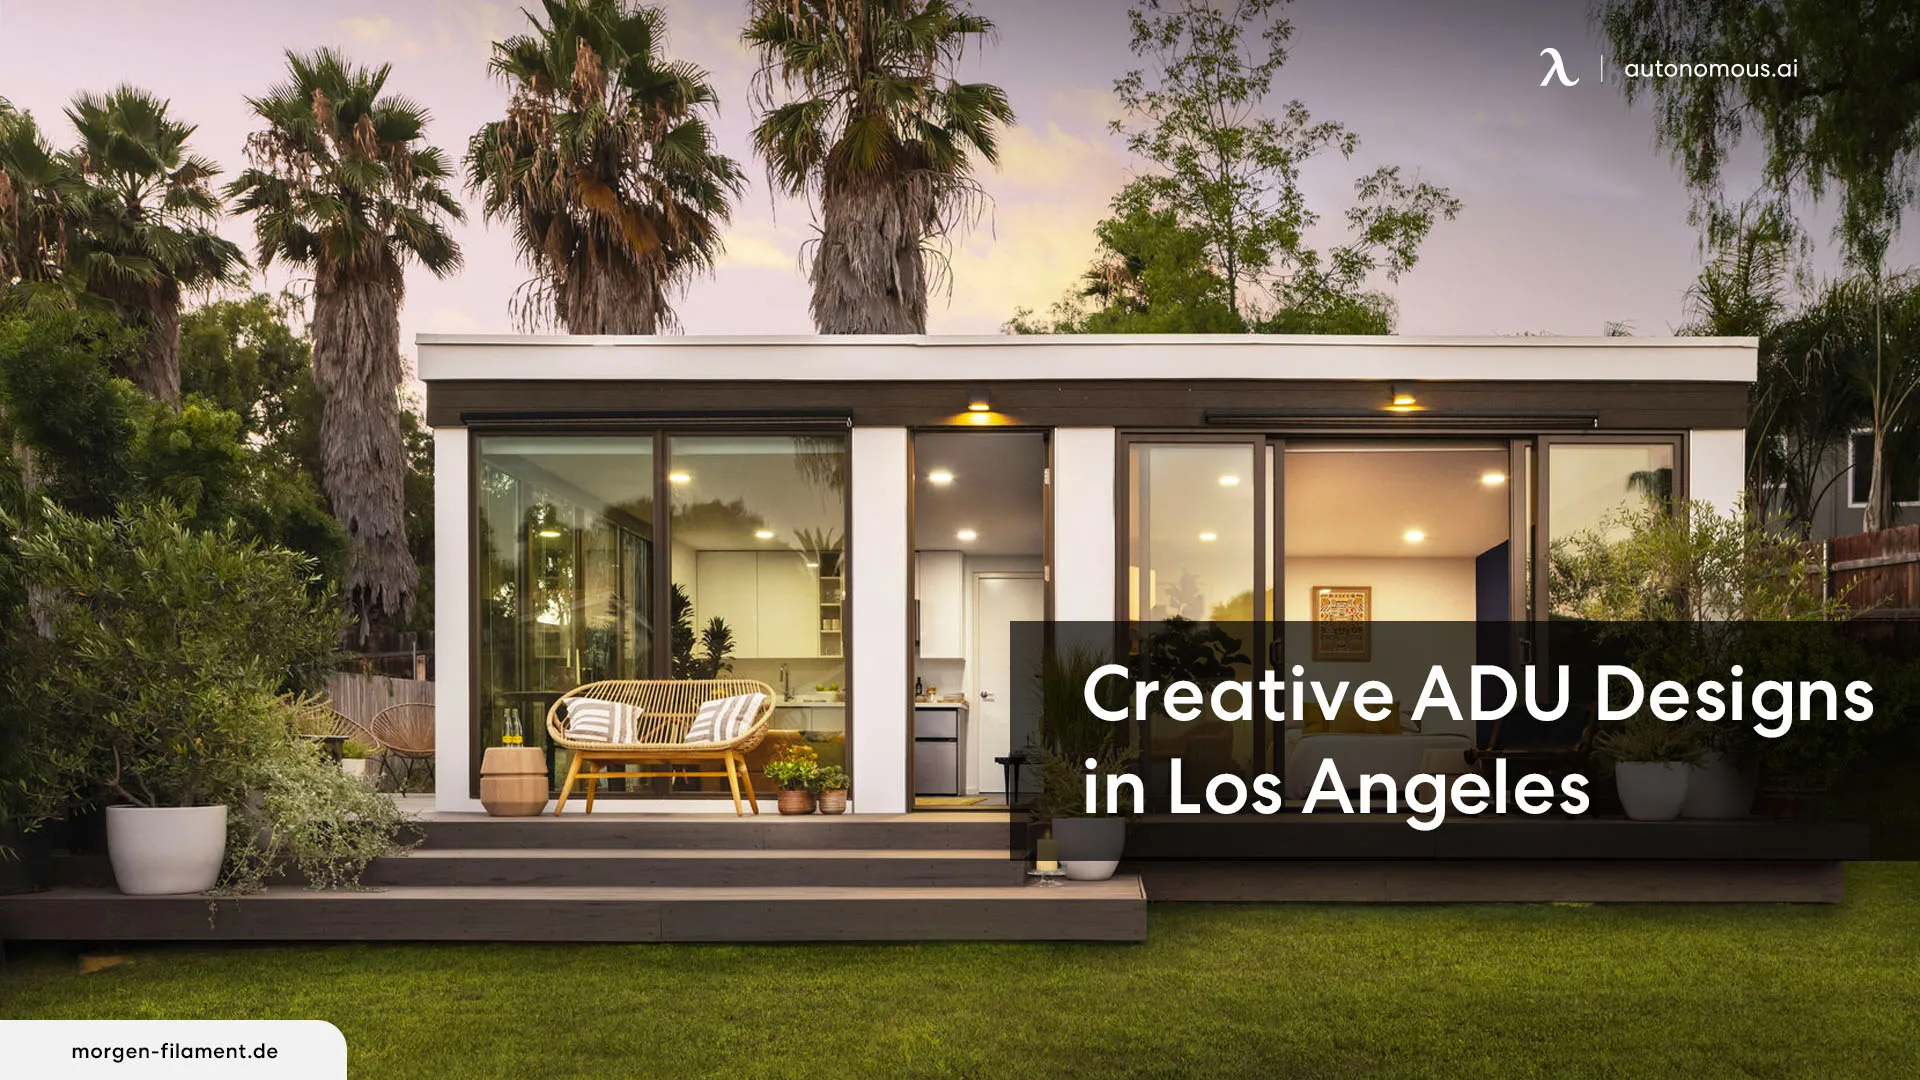 Impress and Creative ADU Designs in Los Angeles